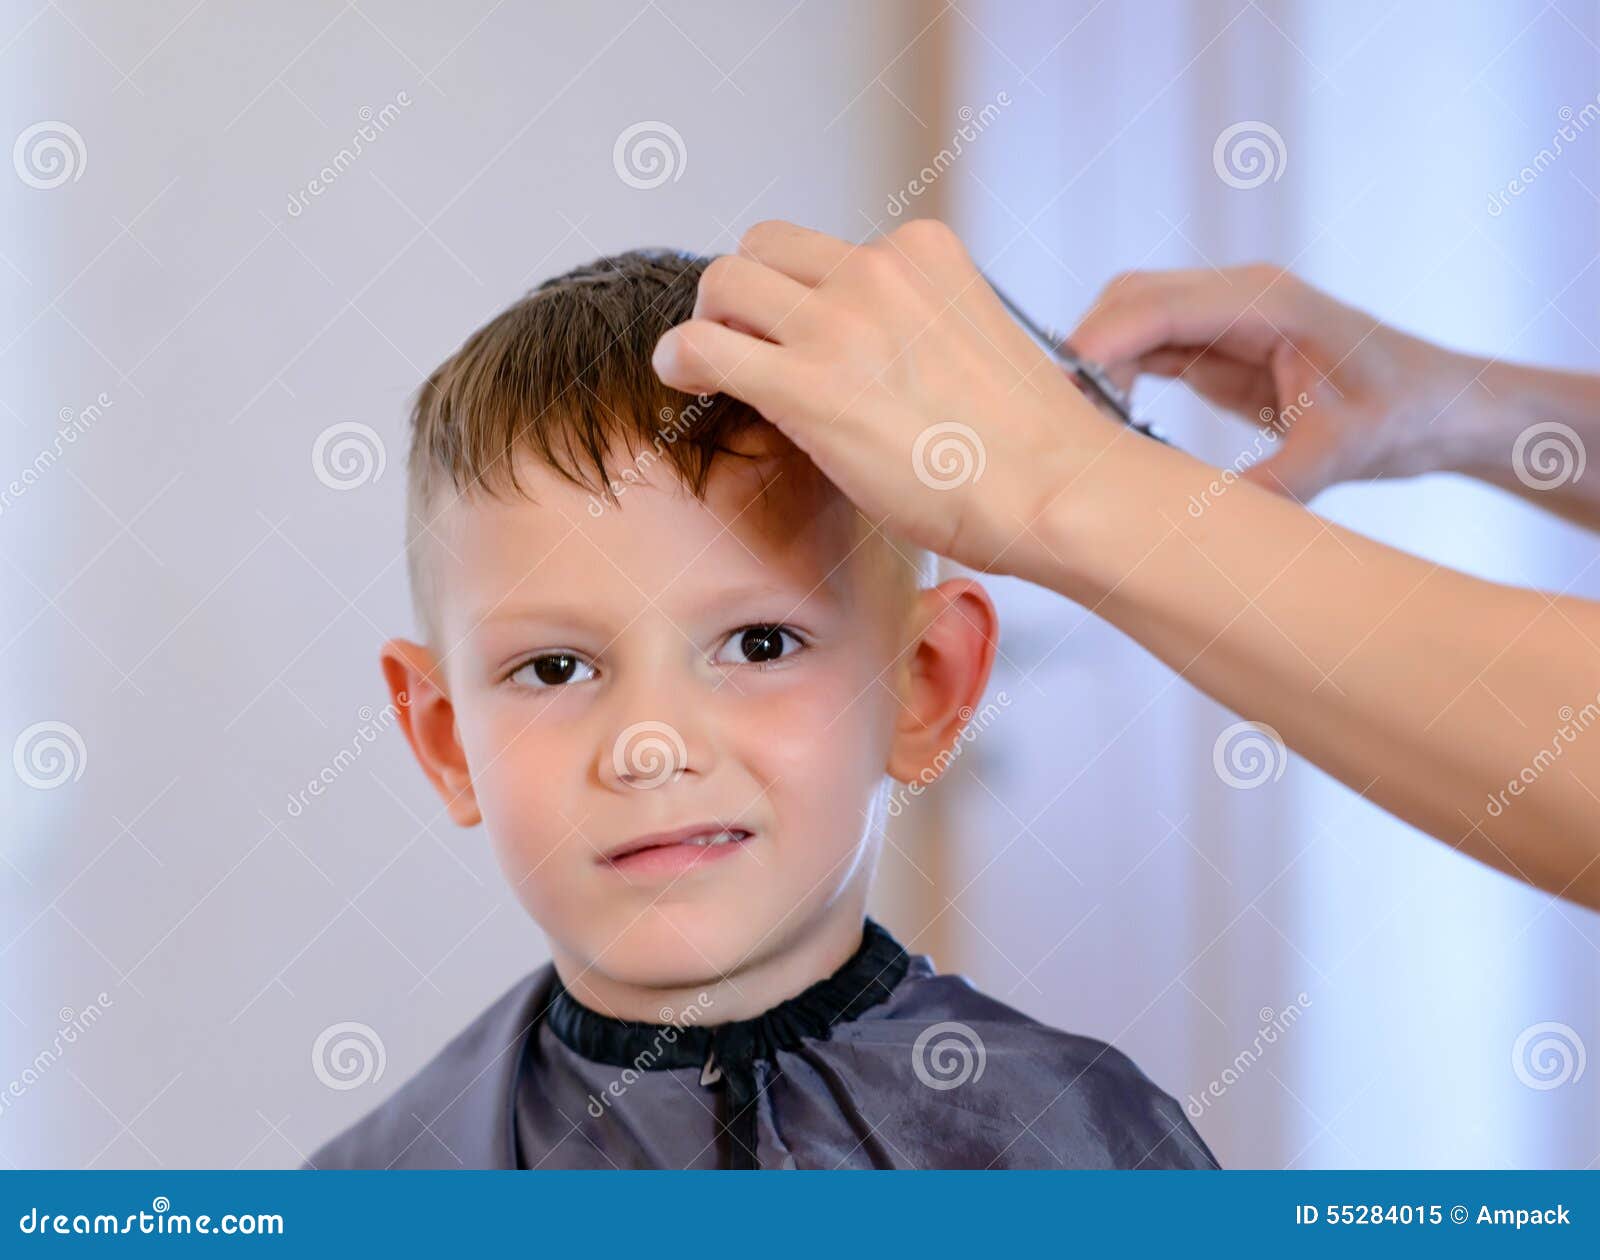 hairdresser cutting little boys hair short hairstyle her salon 55284015